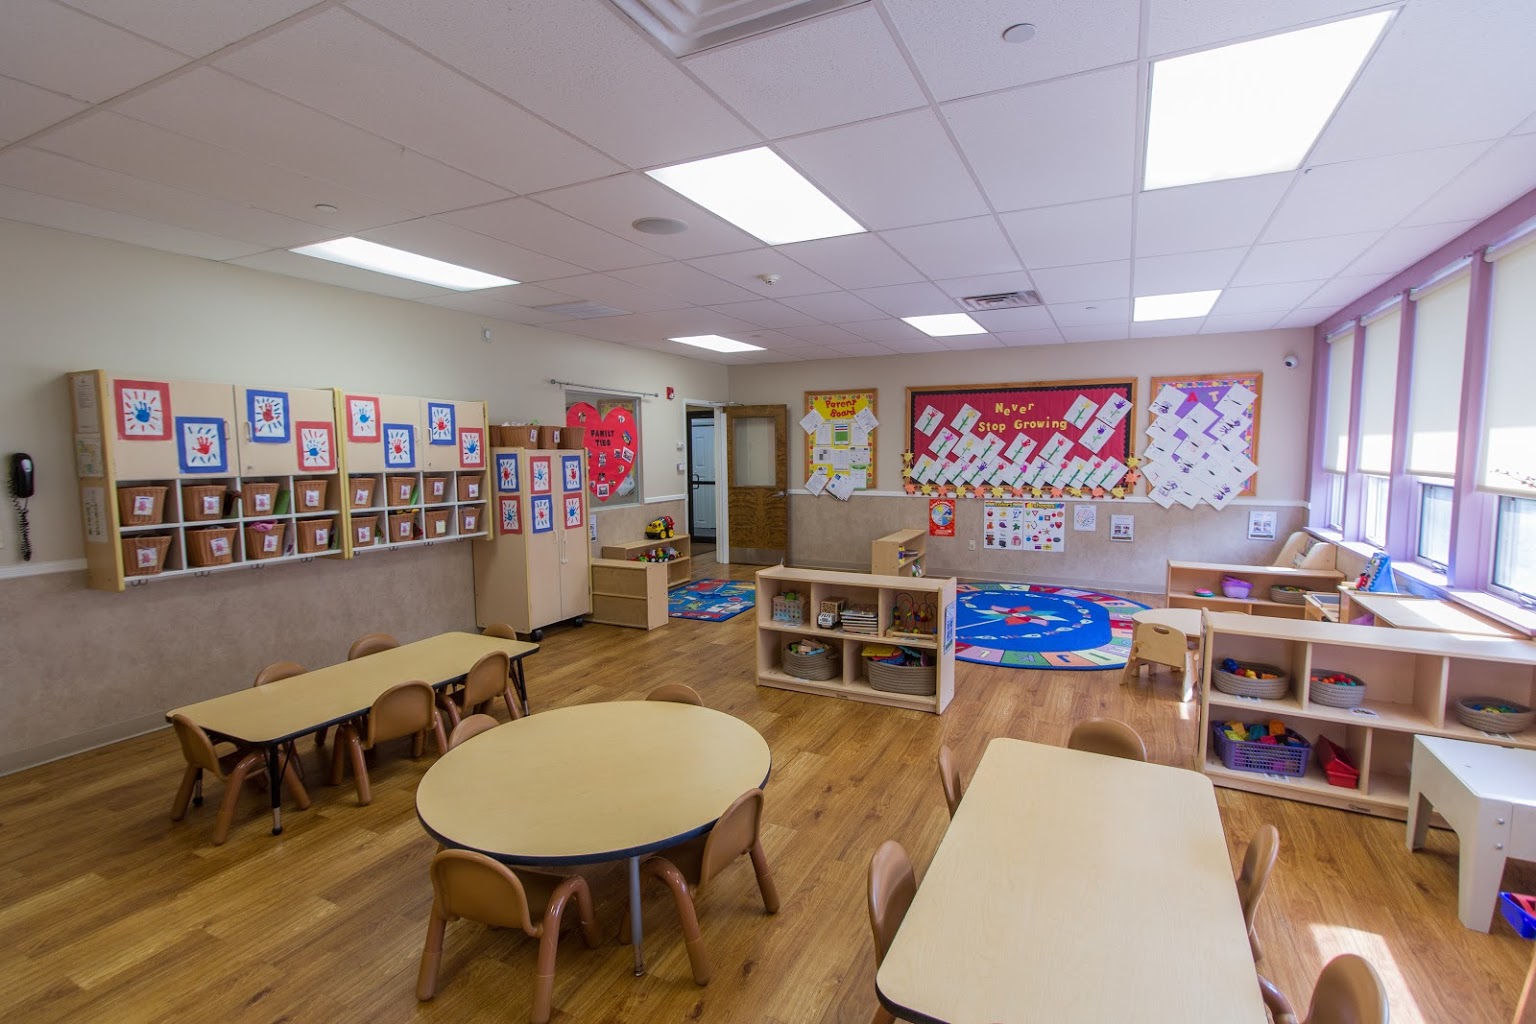 Lightbridge Academy pre-school and daycare in Whippany, NJ